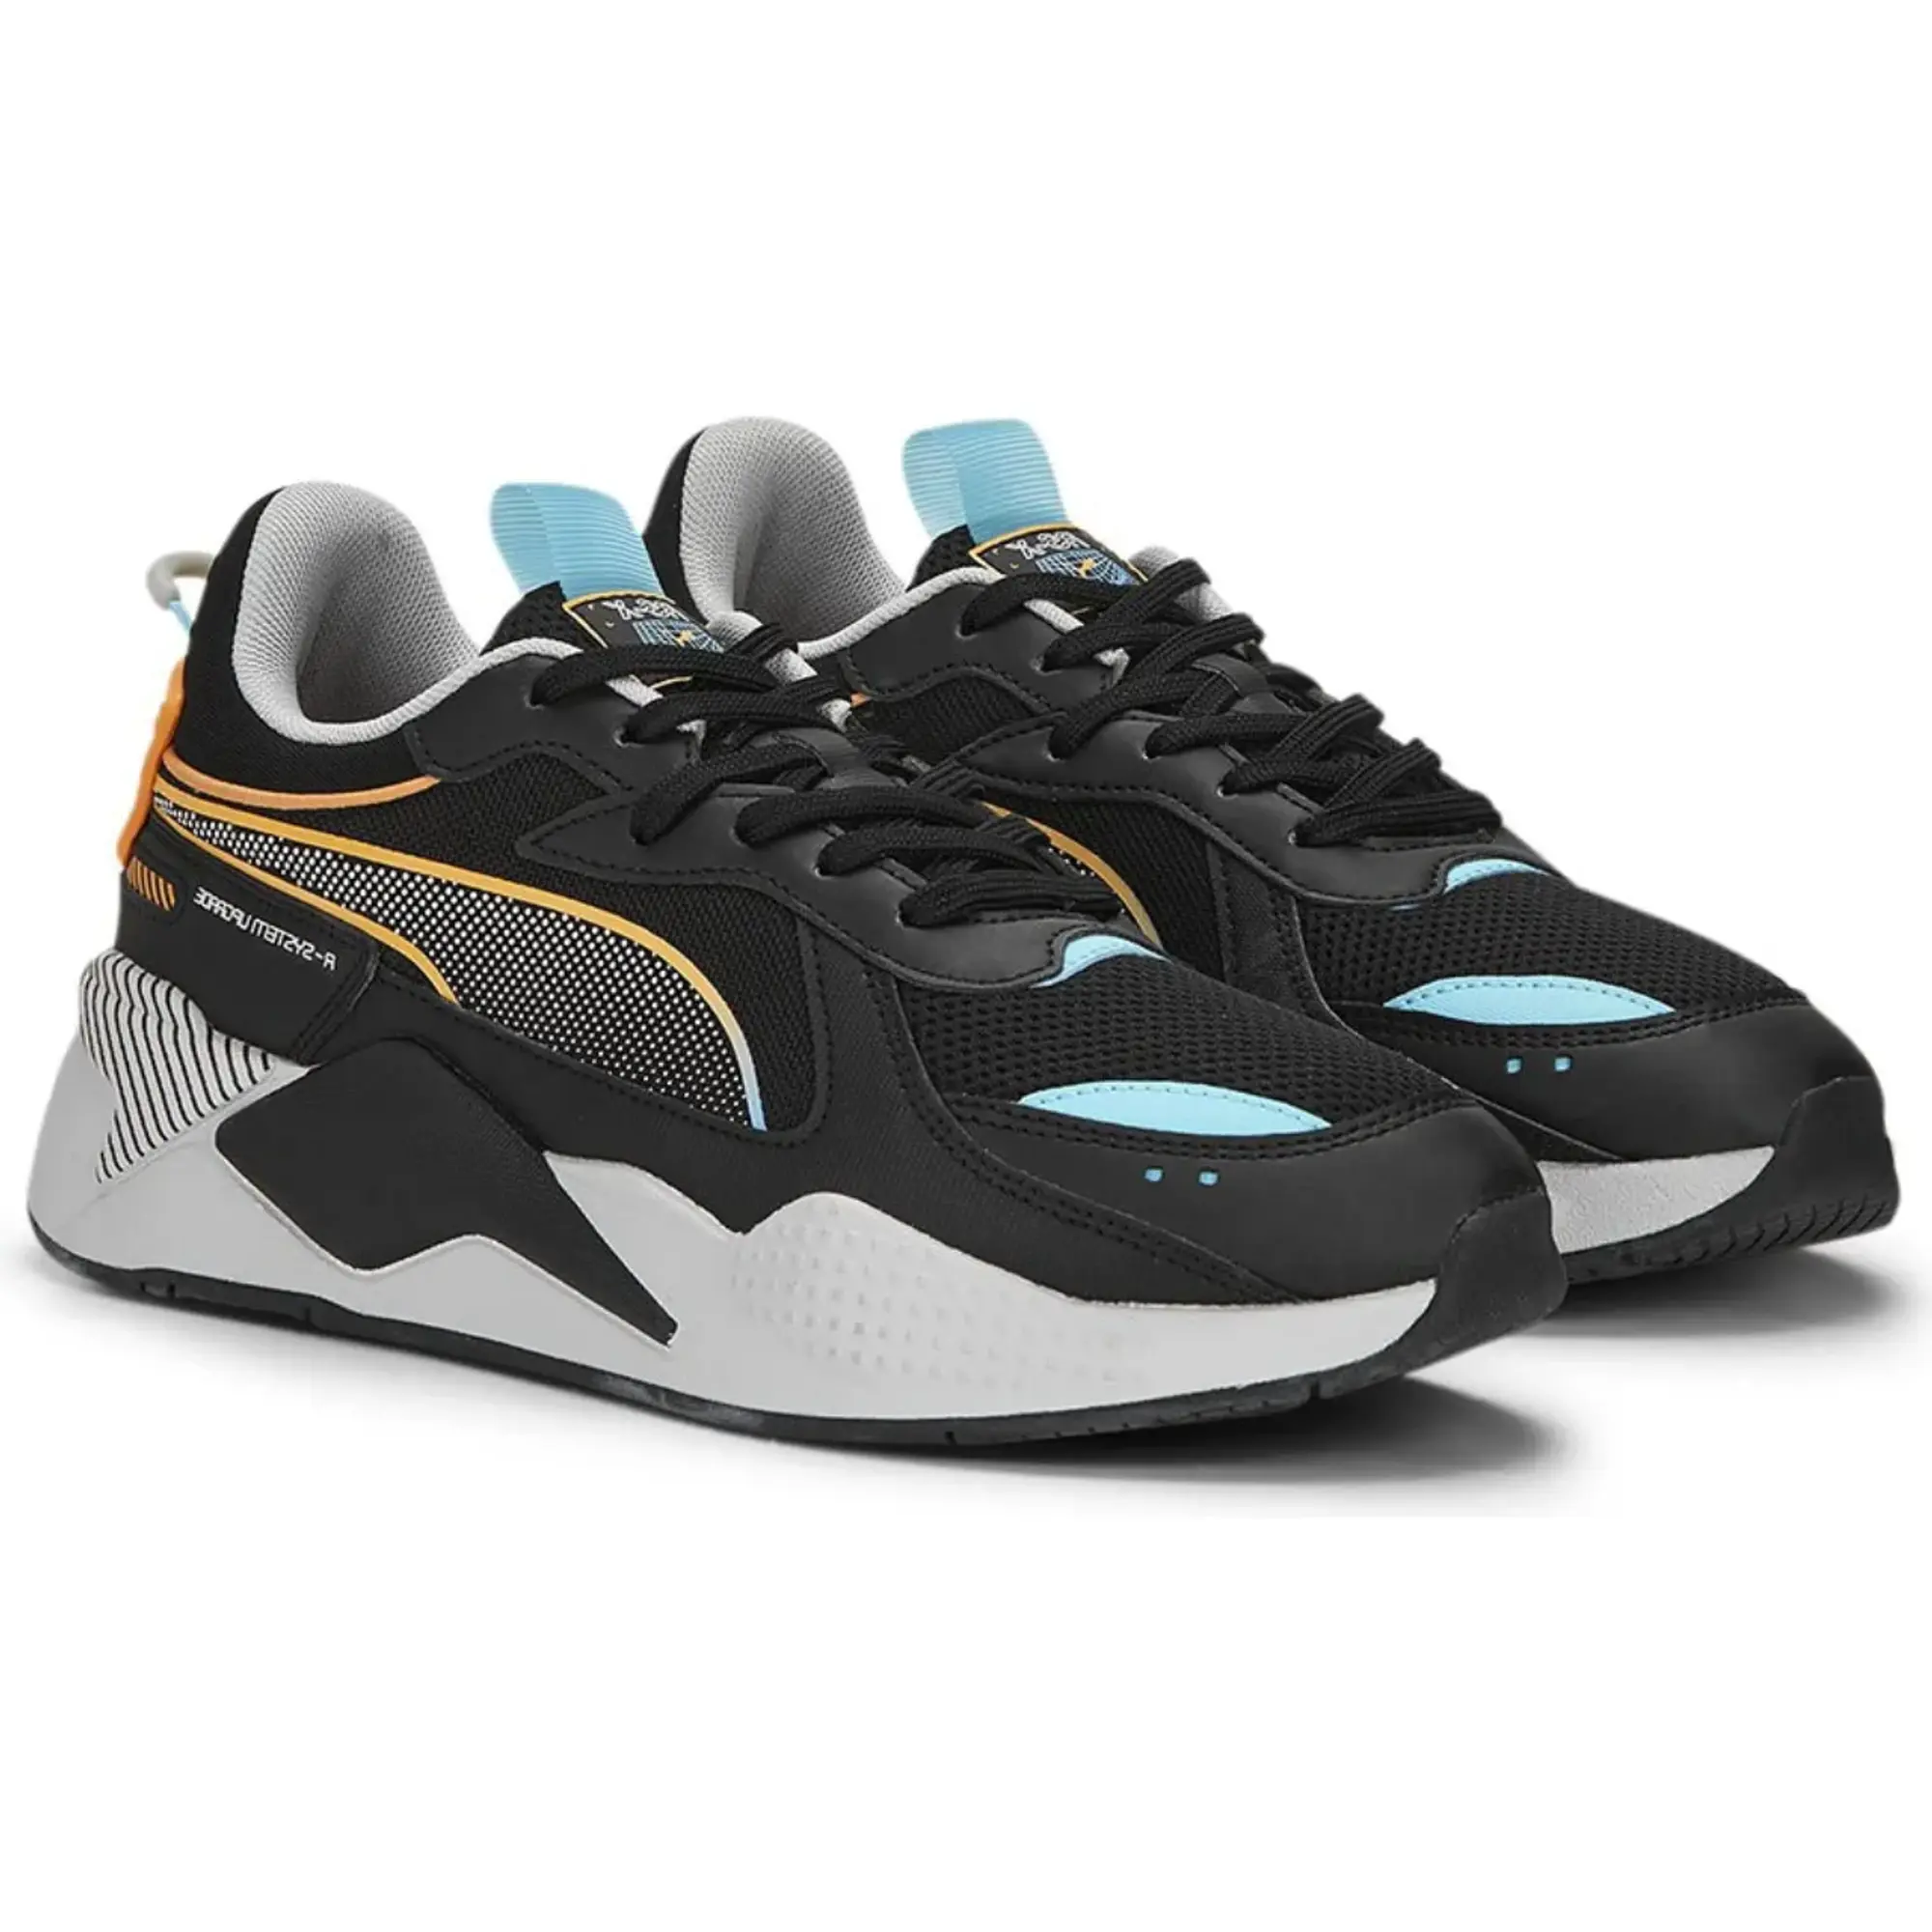 PUMA RS-X 3D Sneakers, Black/Harbor Mist